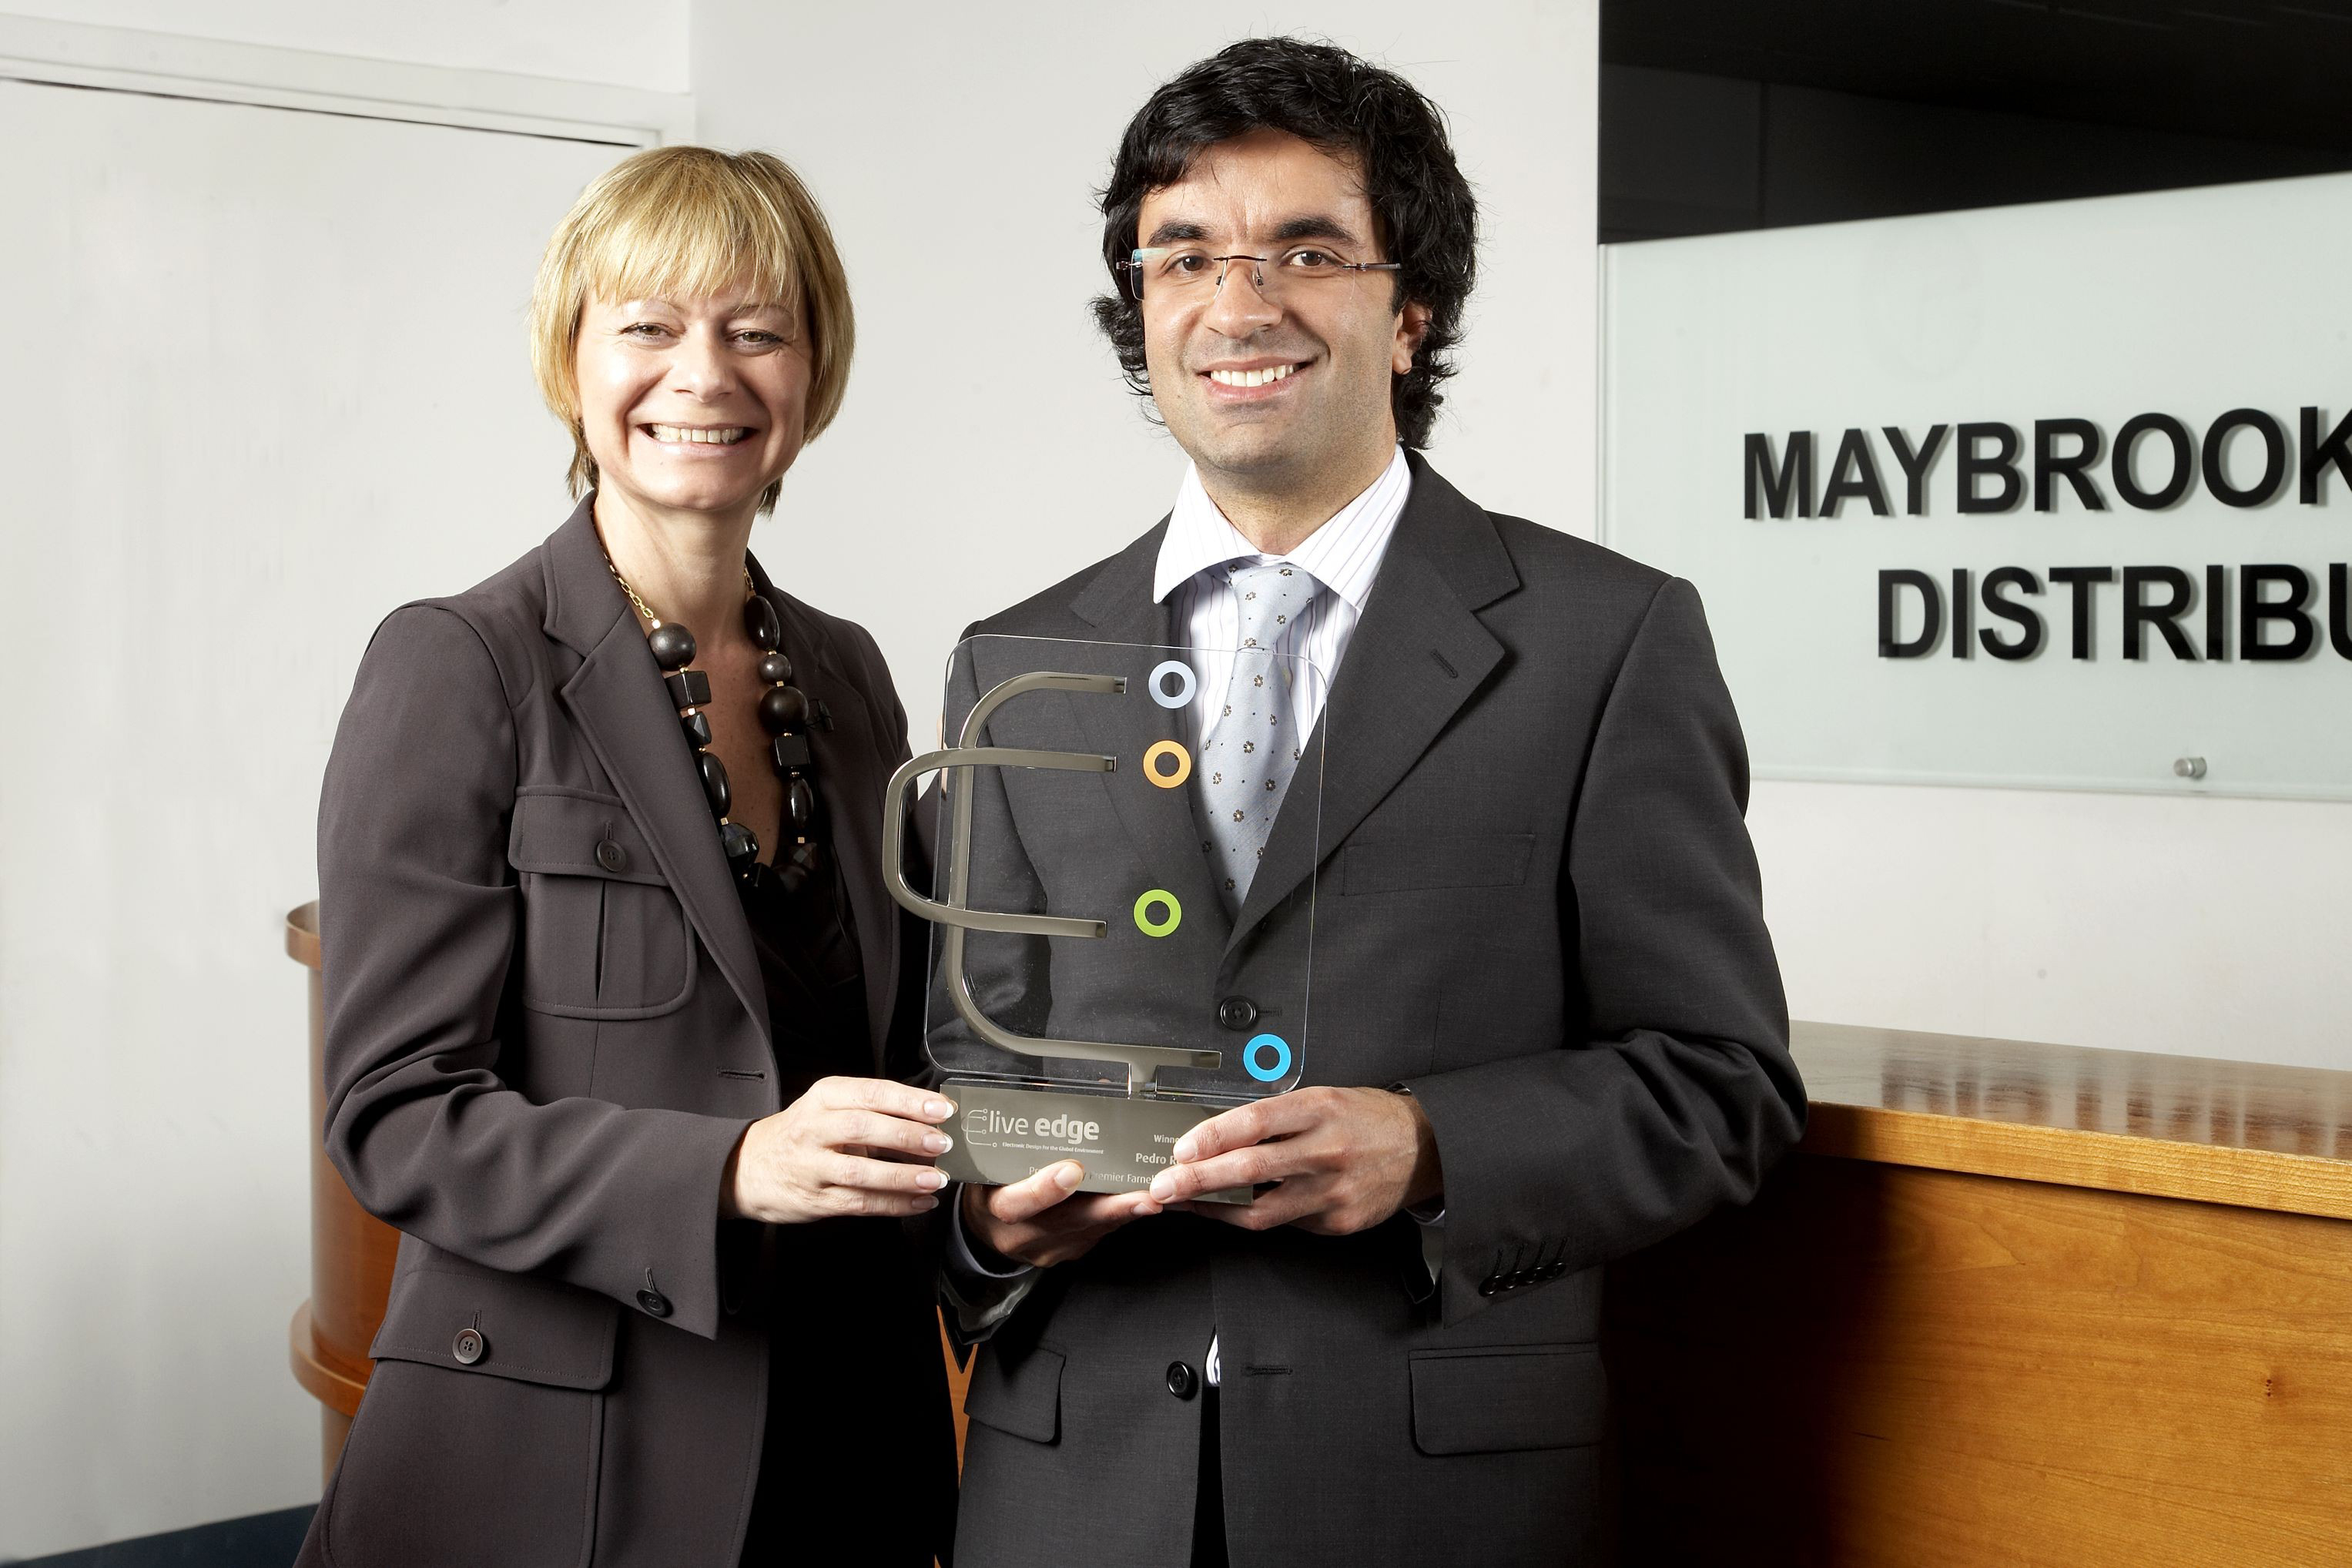 Pedro Rodrigues, vencedor do Live EDGE 2008, recebe o prémio de Harriet Green, Presidente da Premier Farnell.